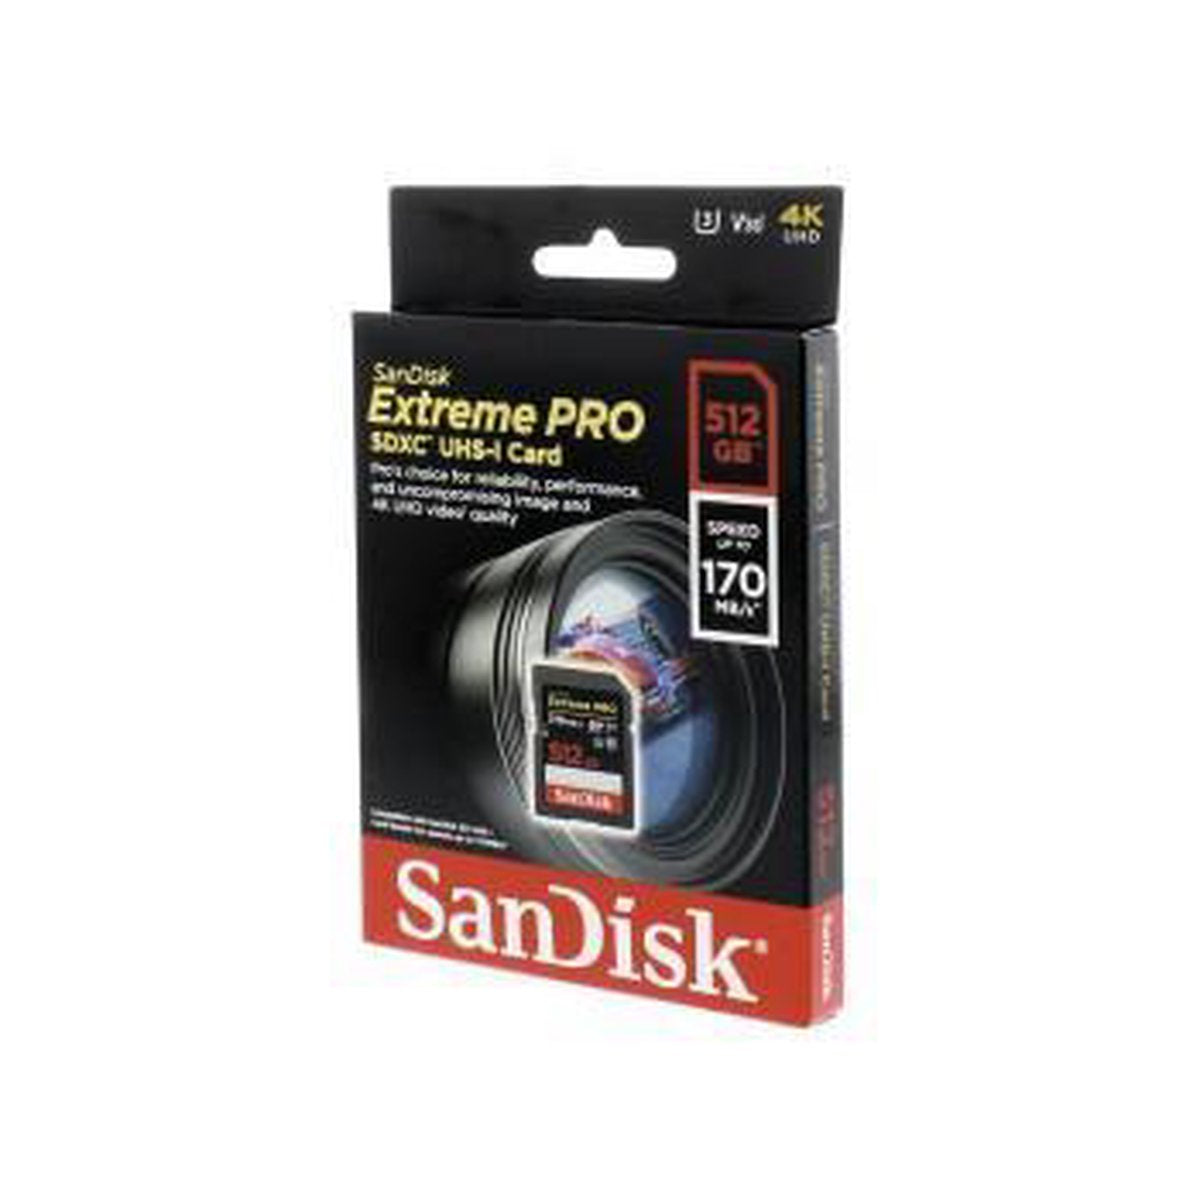 Sandisk Extreme PRO SDXC - Geheugenkaart - 512GB - V30 U3 UHS-I - 170MB/s